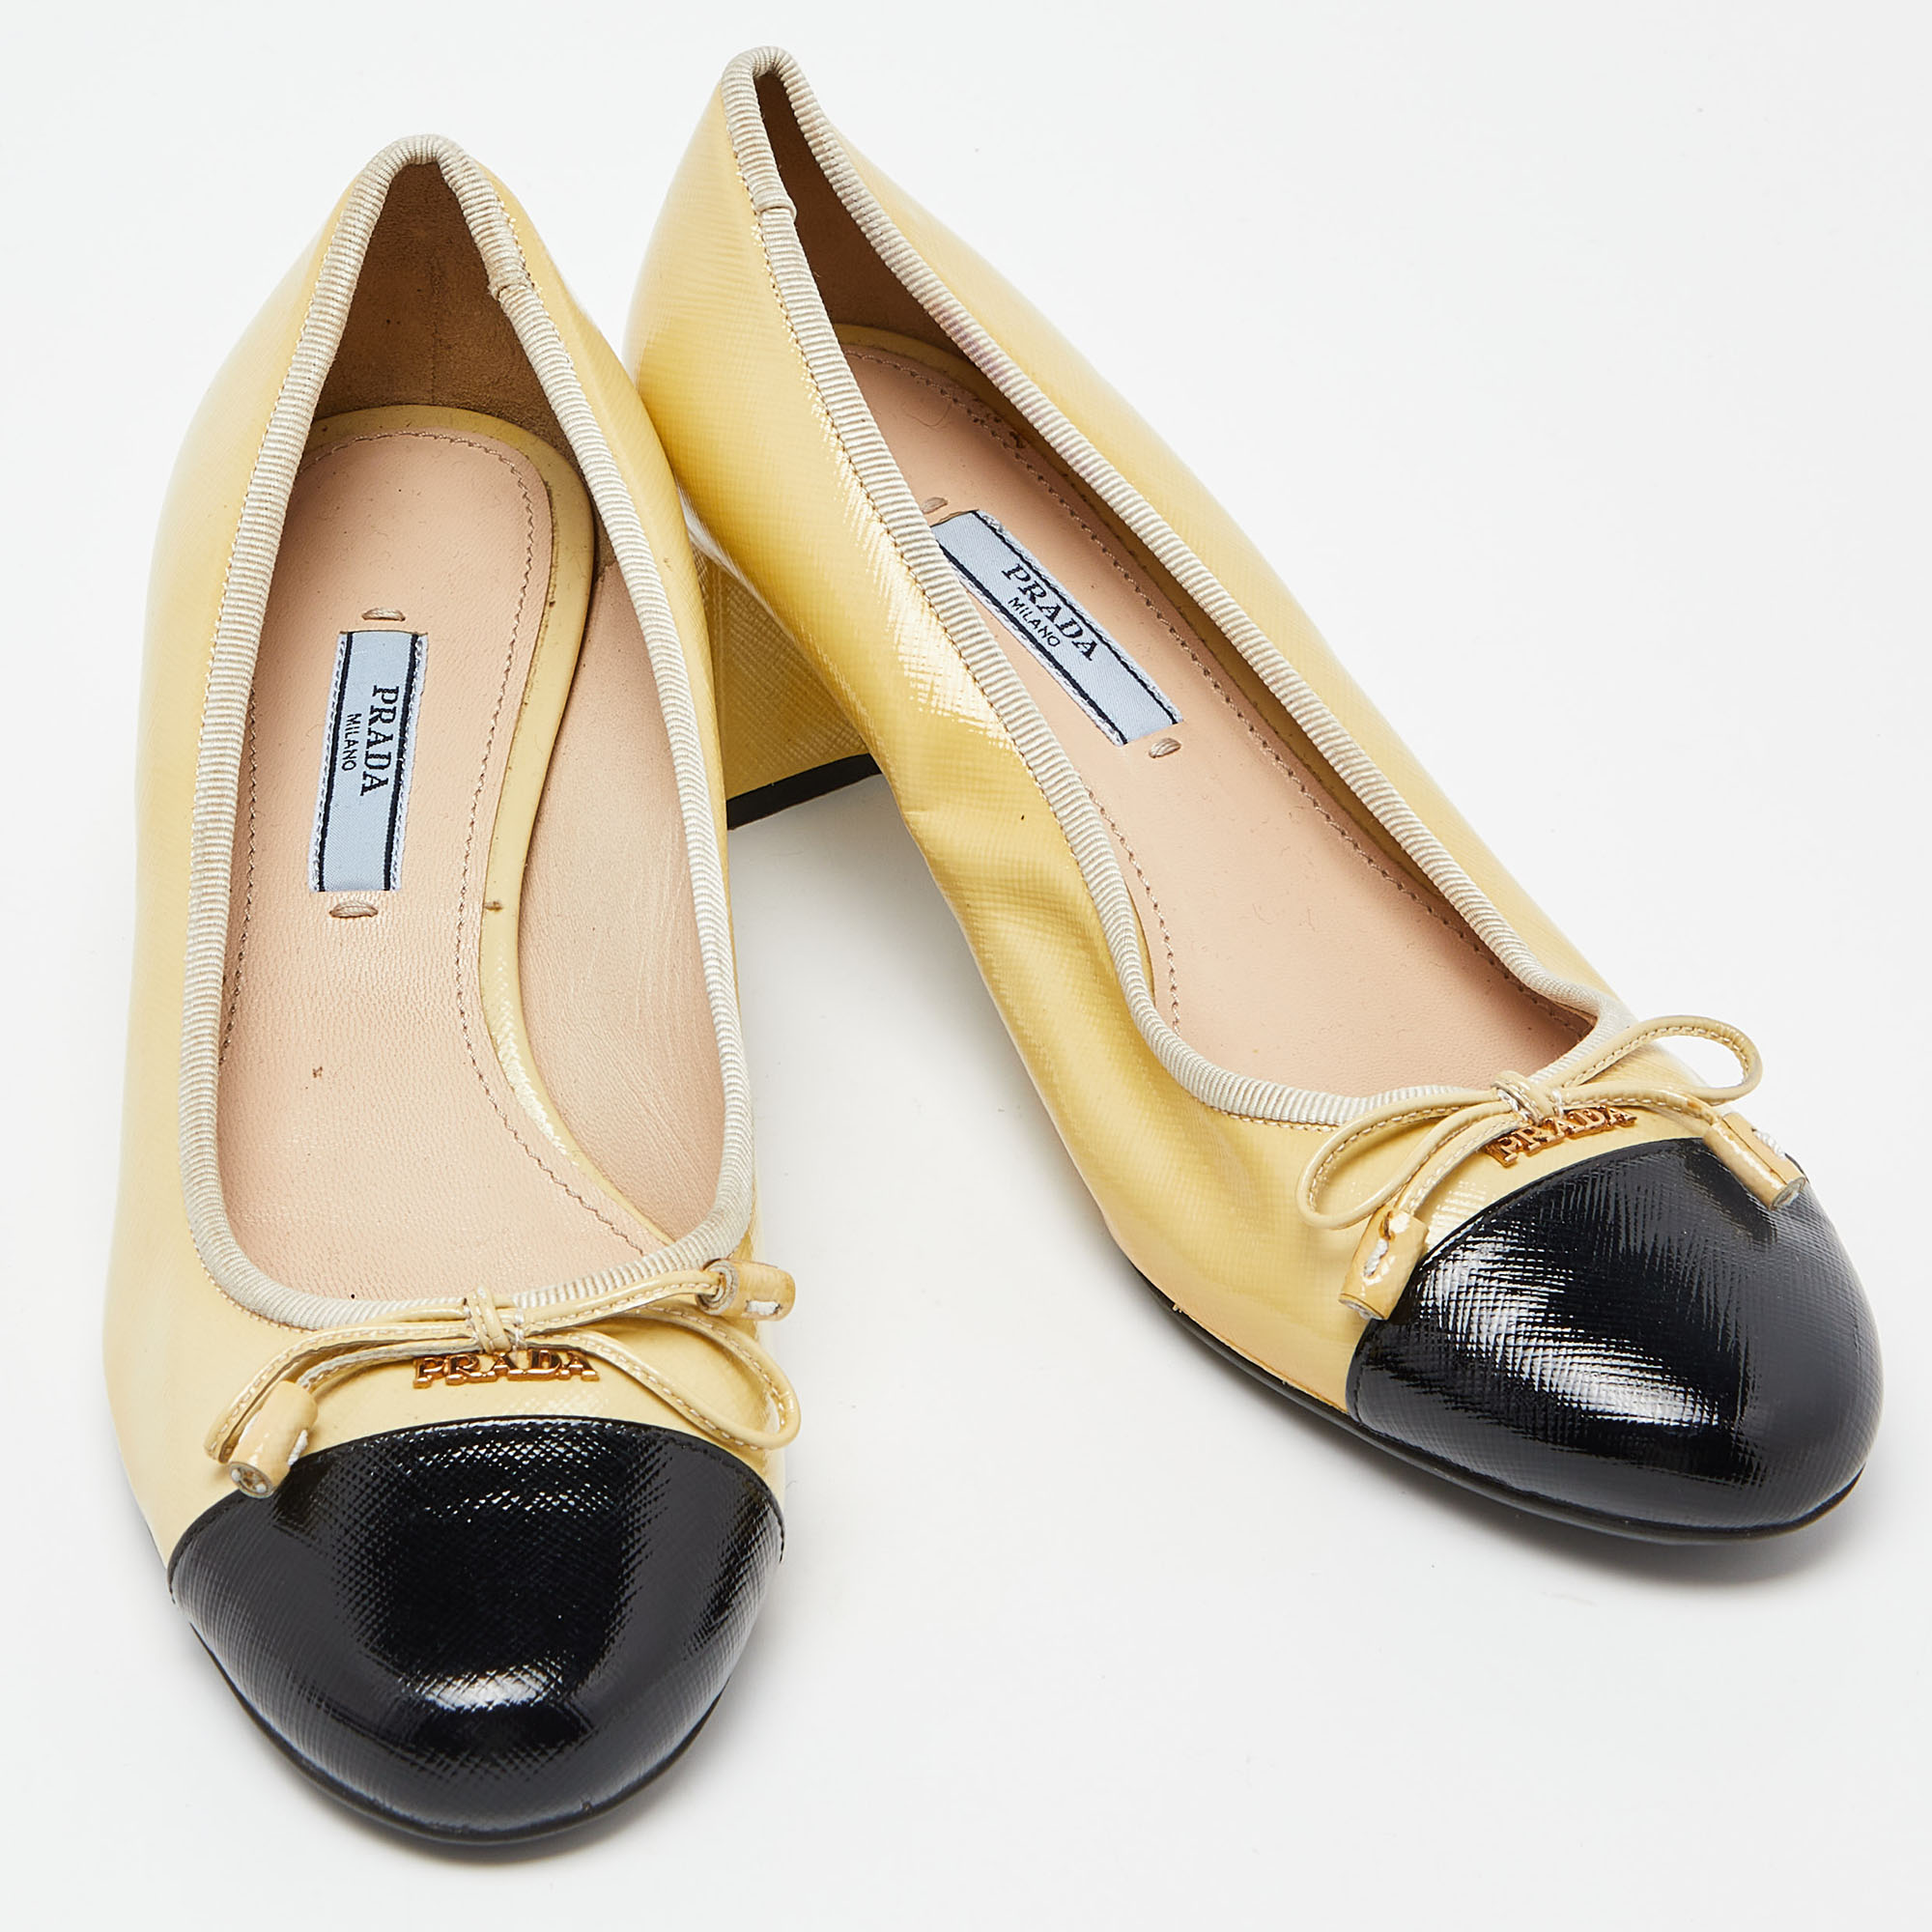 Prada Yellow/Black Patent Leather Bow Block Heel Pumps Size 38.5